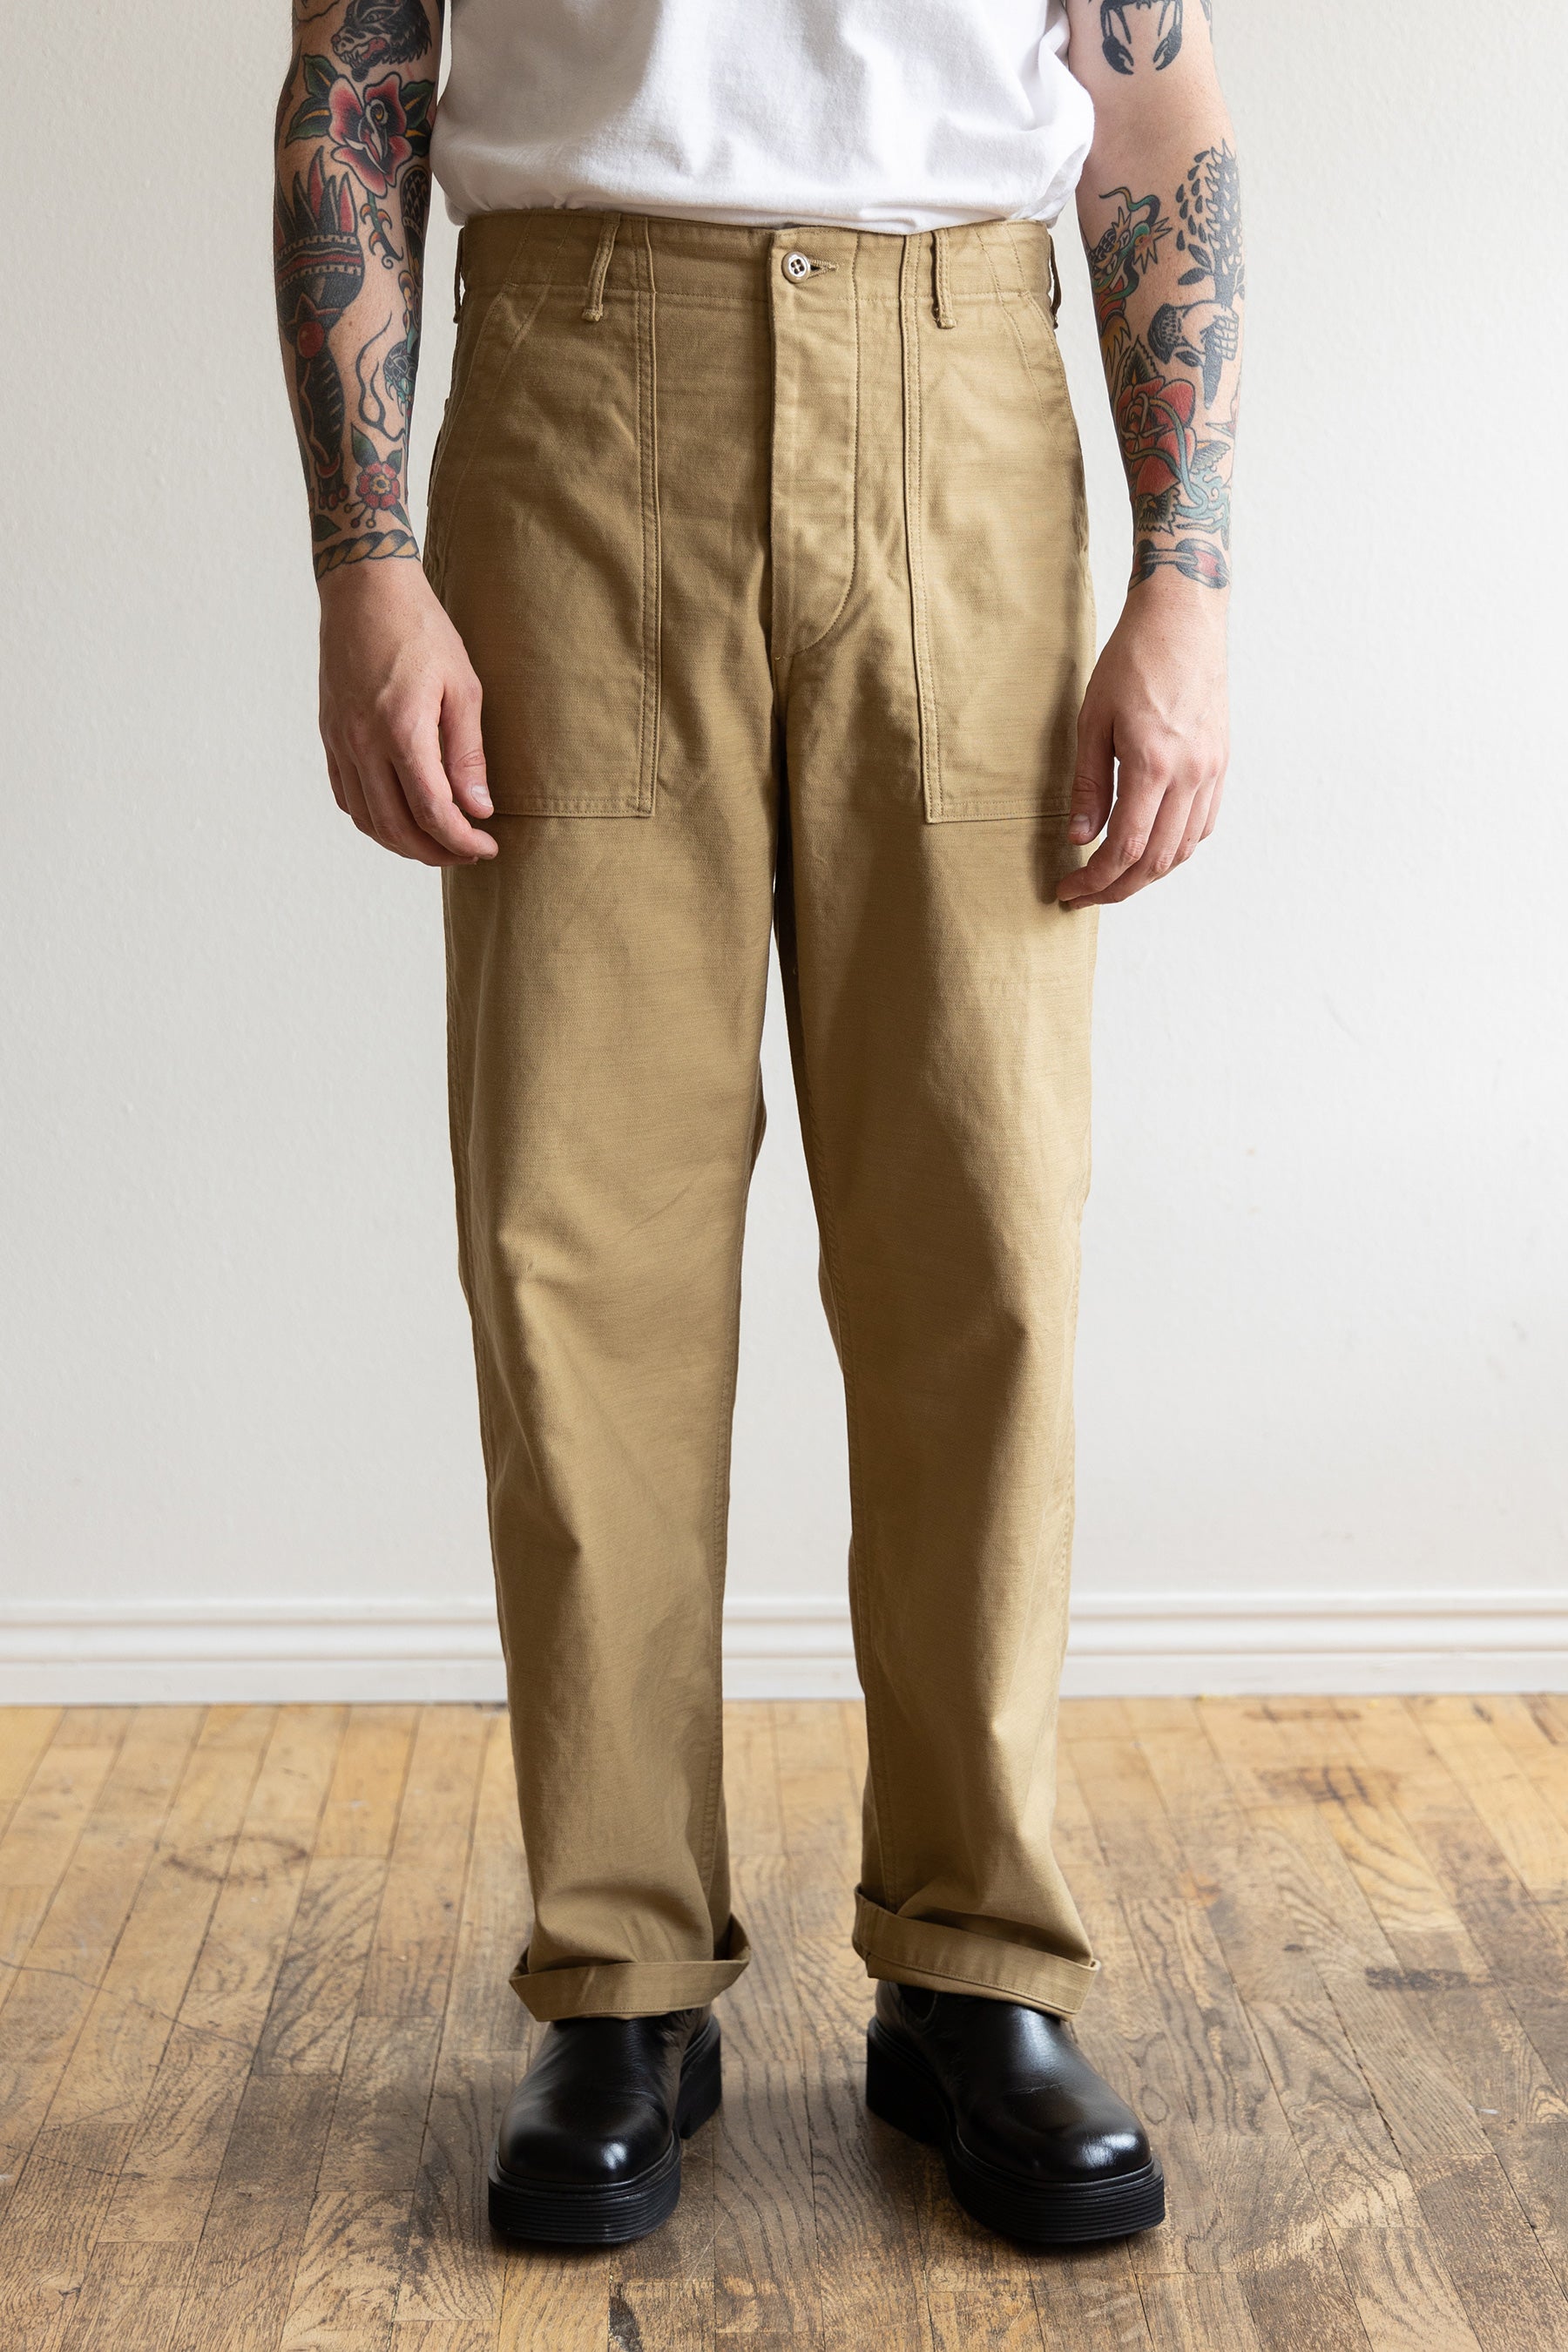 US Army Fatigue Pants (Regular Fit) - Khaki